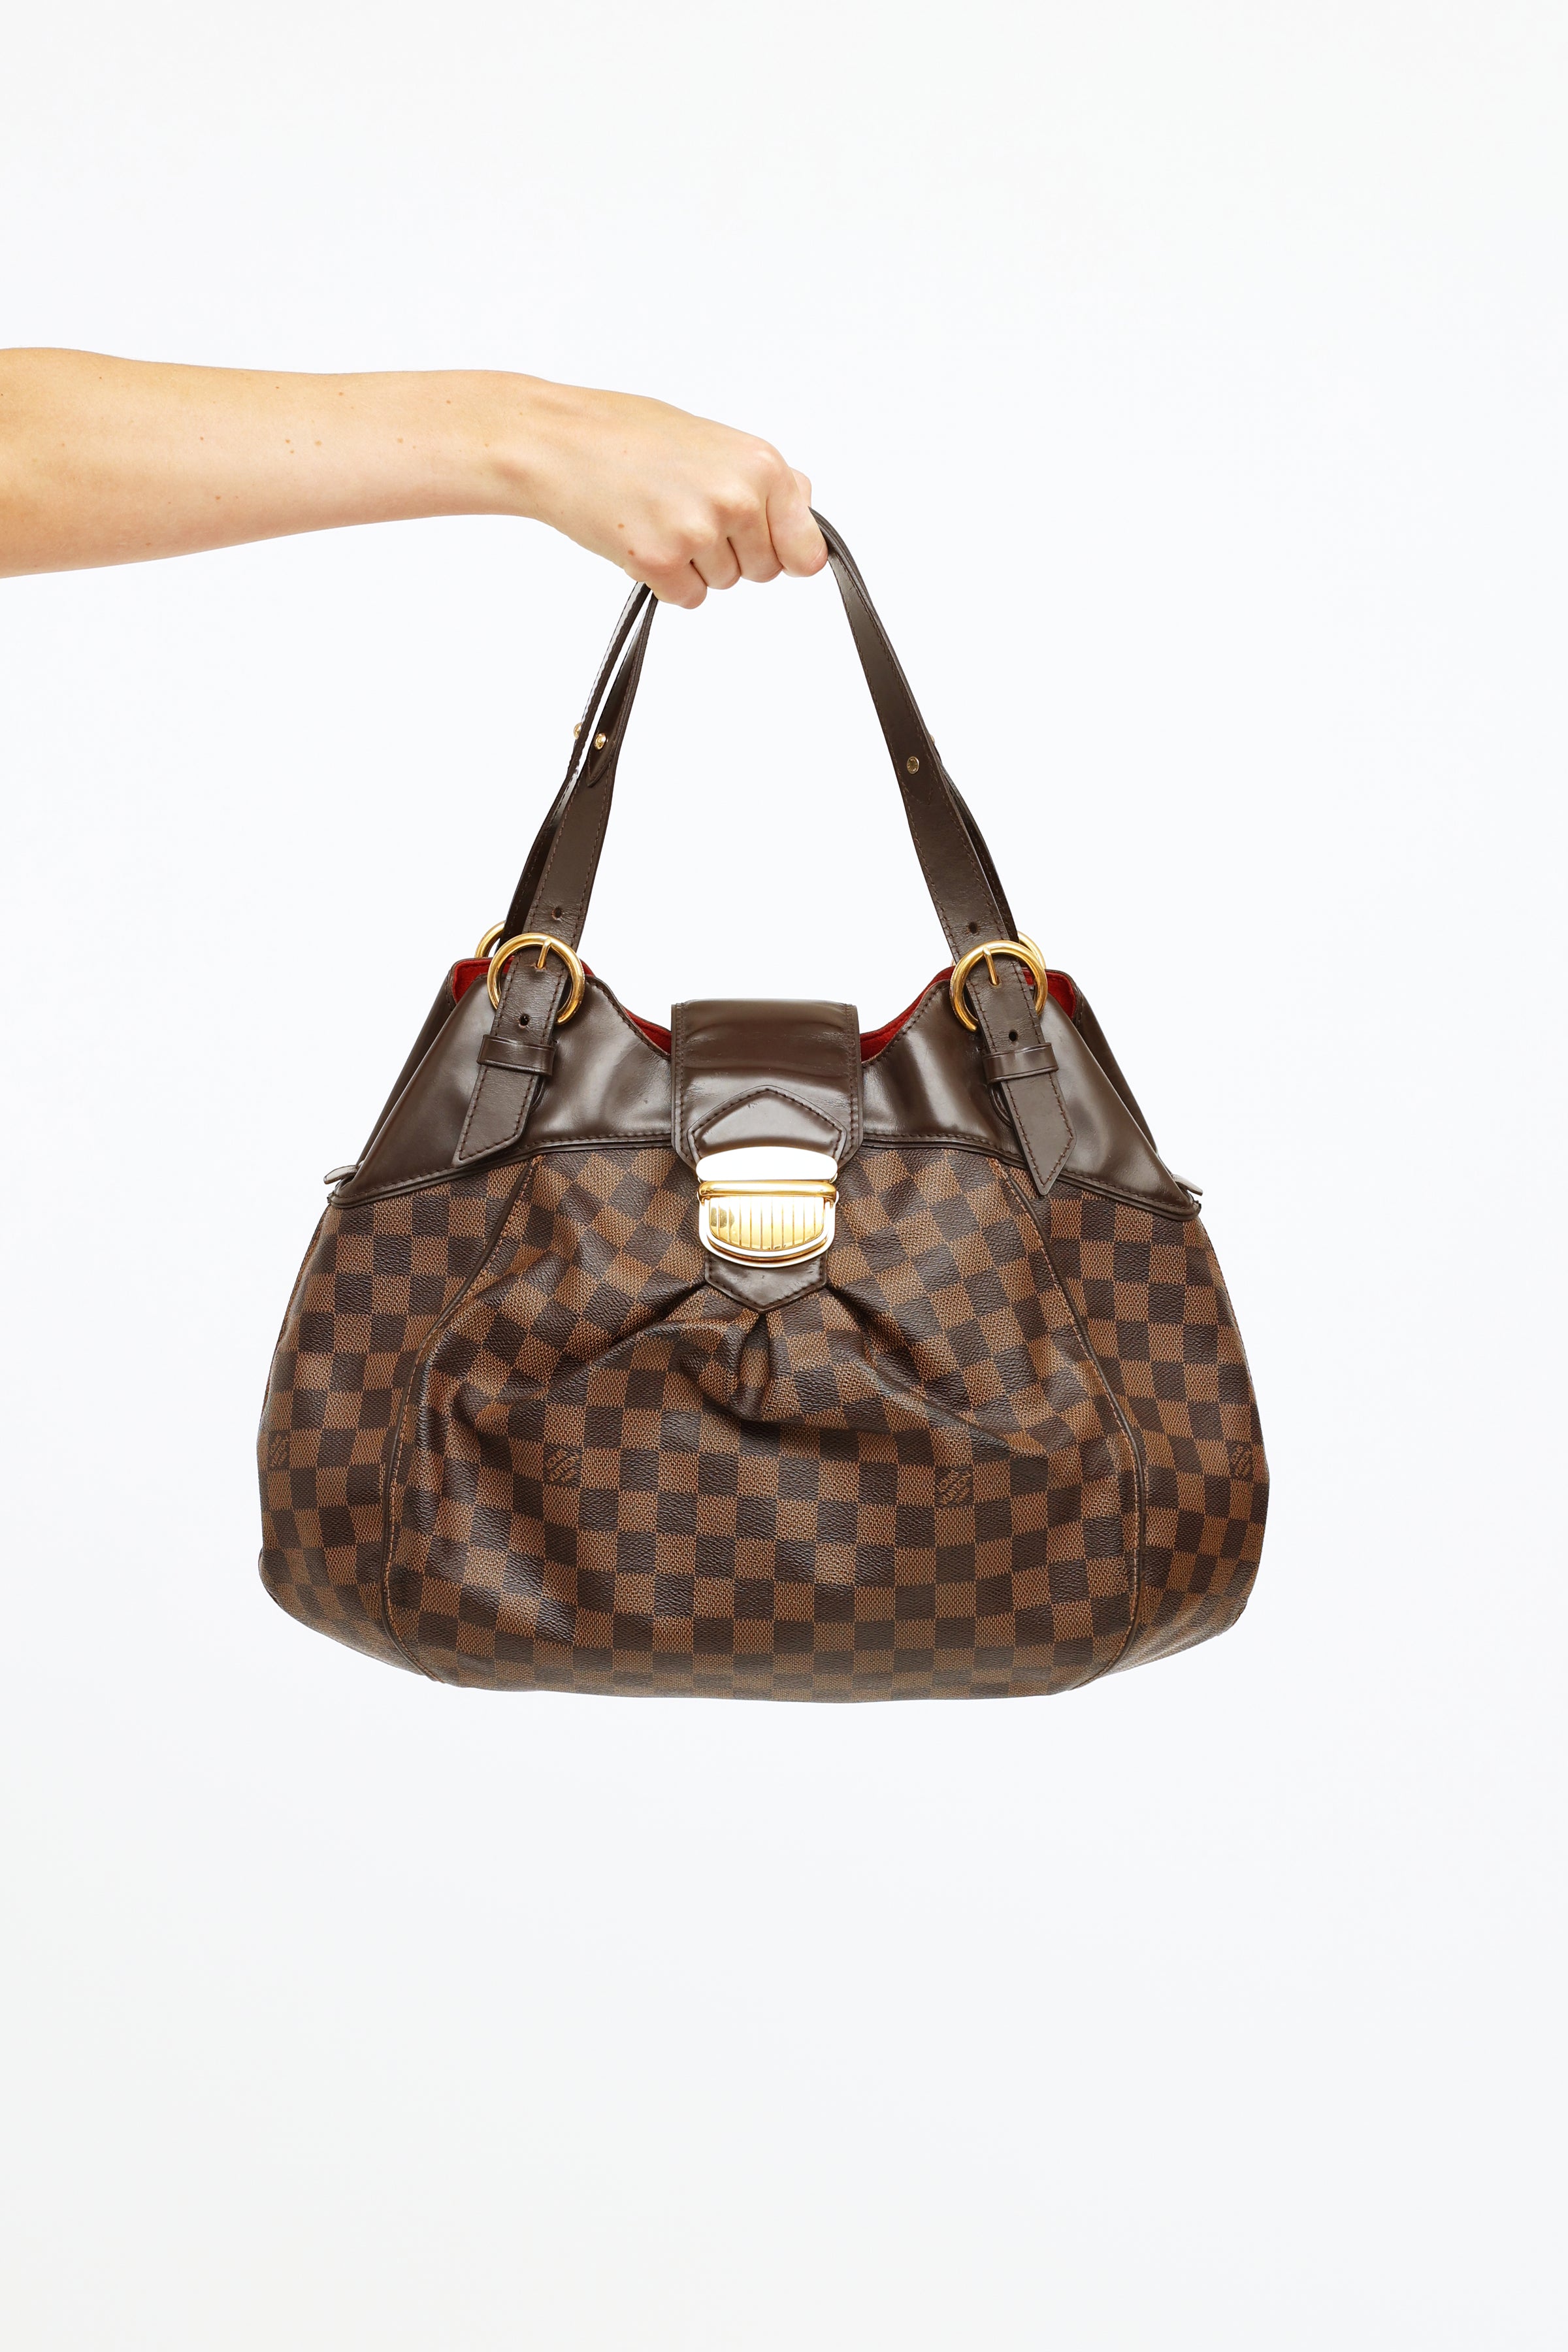 Louis Vuitton, Bags, Louis Vuitton Sistina Damier Gm Shoulder Bag Nwt